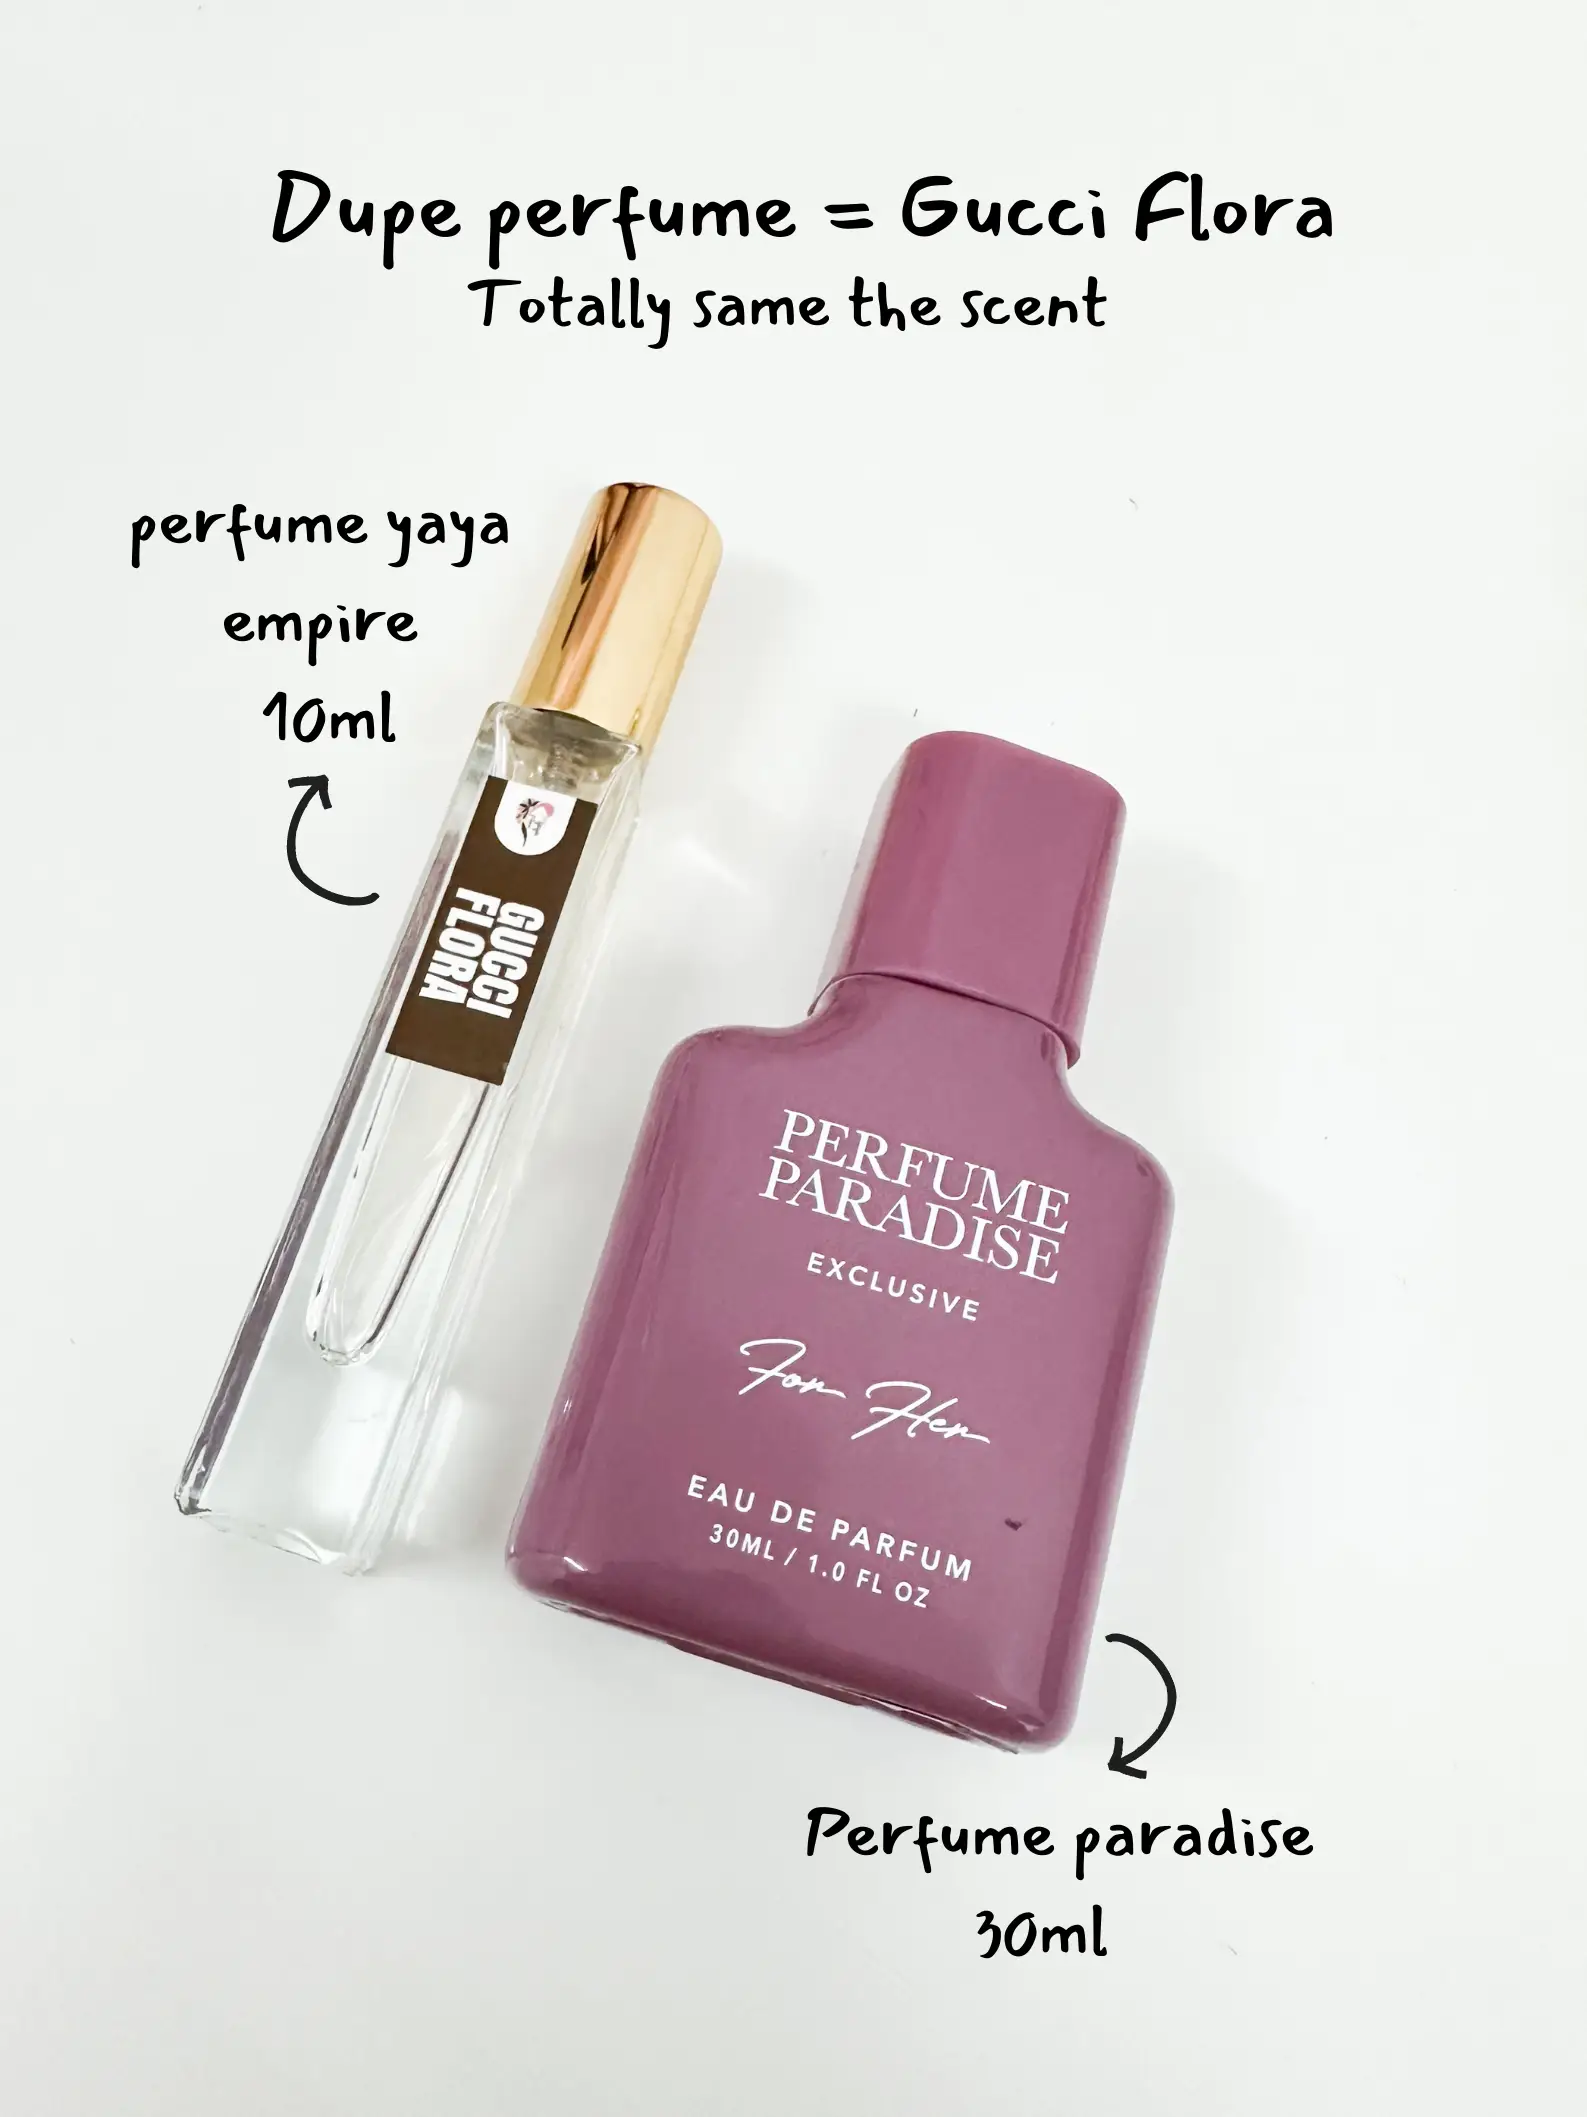 ✨Dupe Perfume 💯 Similar With Original✨, Gallery posted by Dhaniya Aqilah